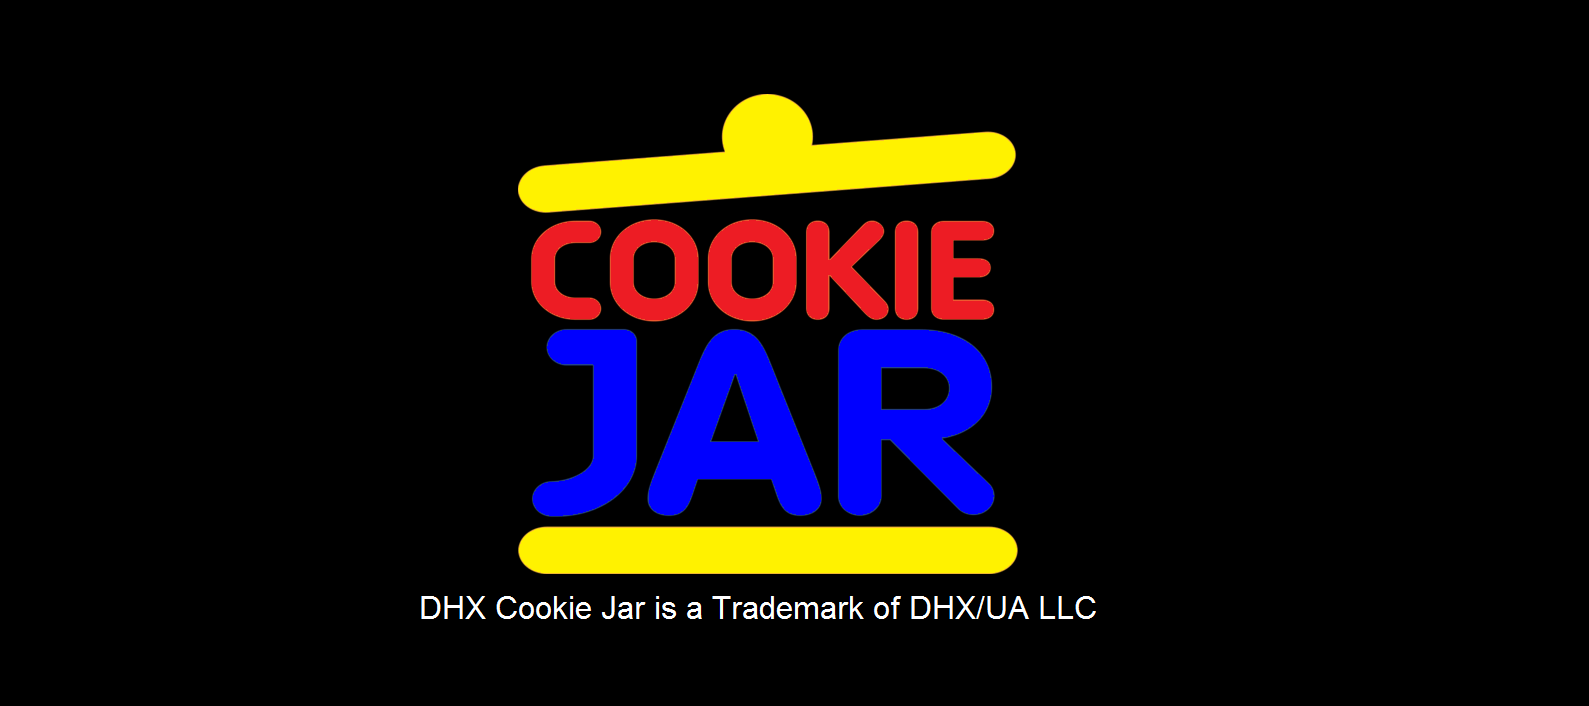 Cookie Jar Entertainment Logo - Cookie Jar Entertainment | The Idea Wiki | FANDOM powered by Wikia